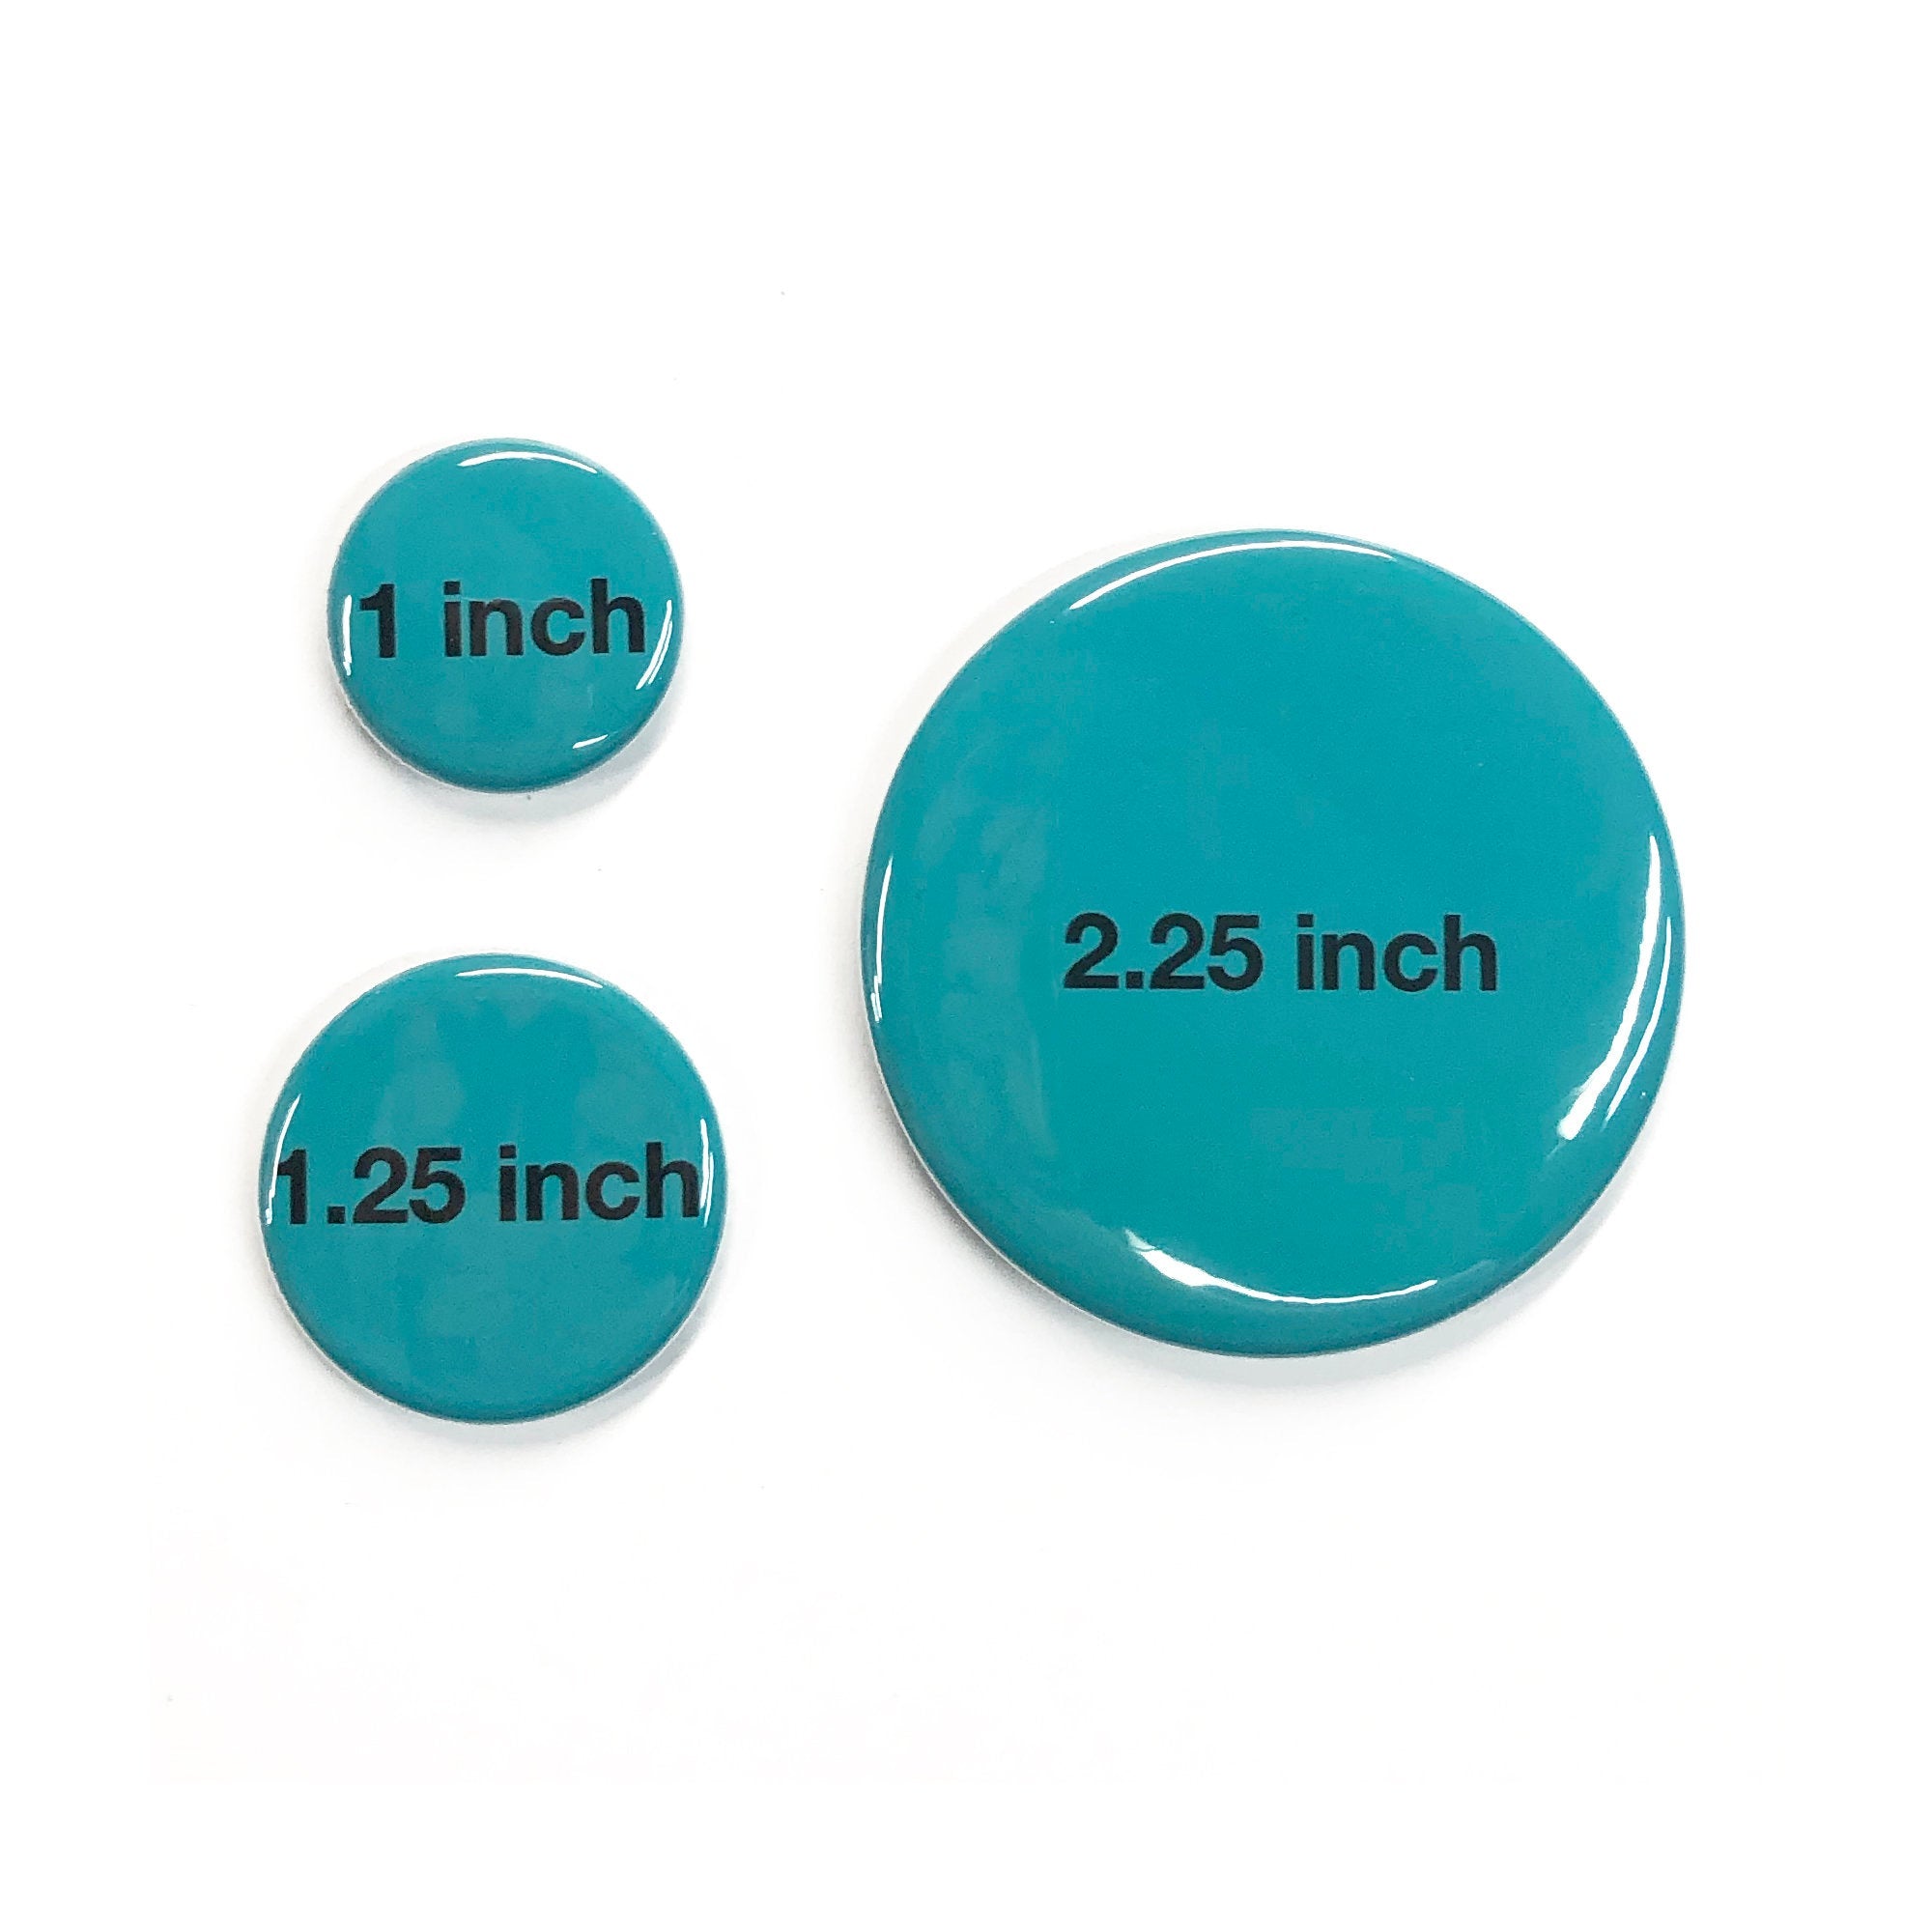 Floral Pocket Mirror, Pinback Button, or Magnet